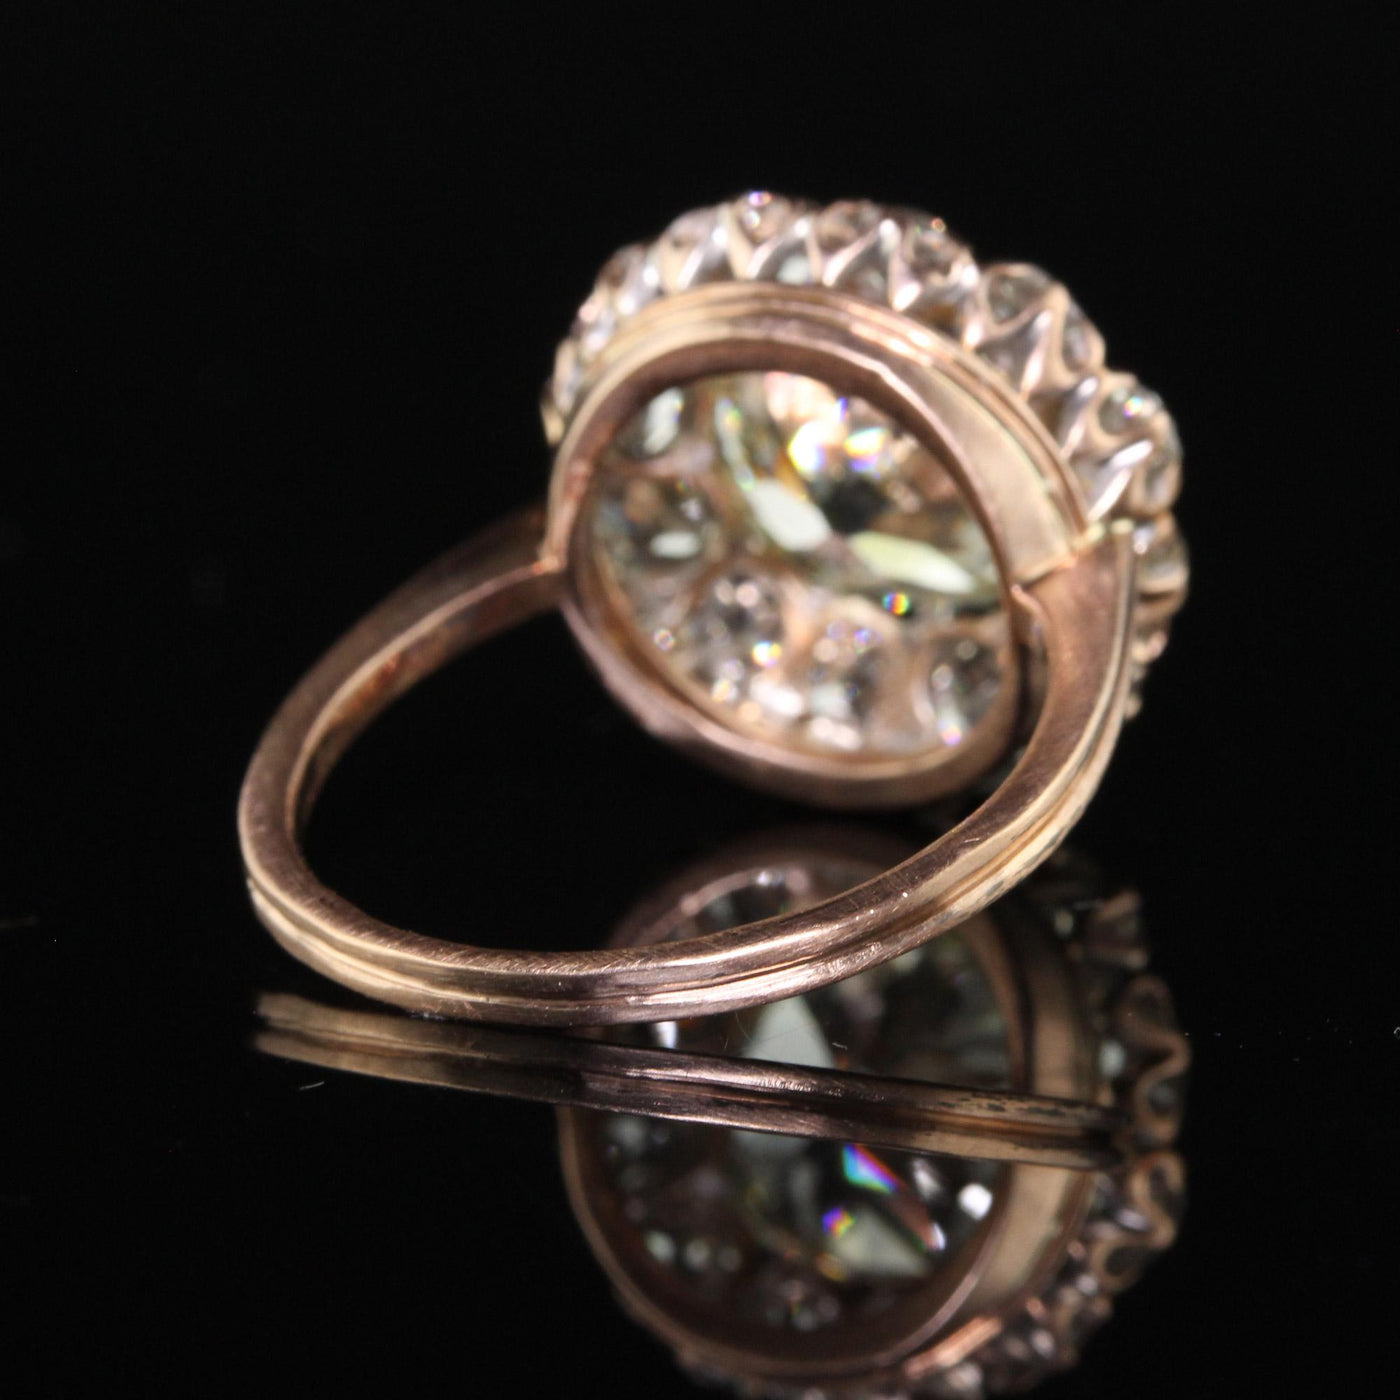 Antique Art Deco 14K Rose Gold Old European Diamond Halo Engagement Ring - GIA